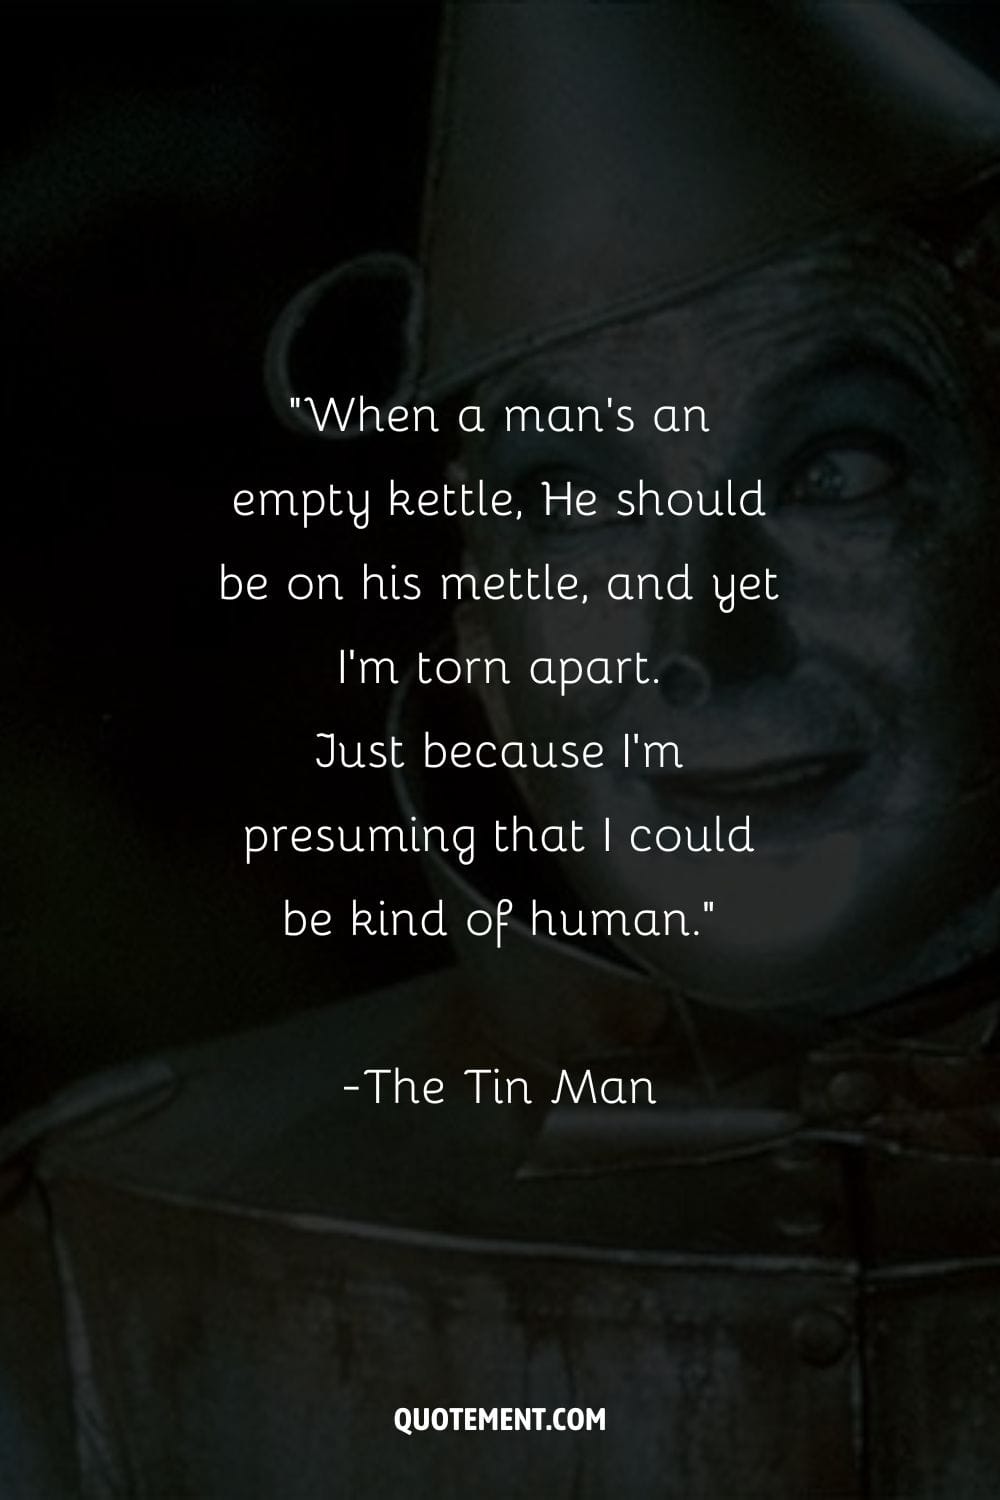 portrayal of Tin Tin
